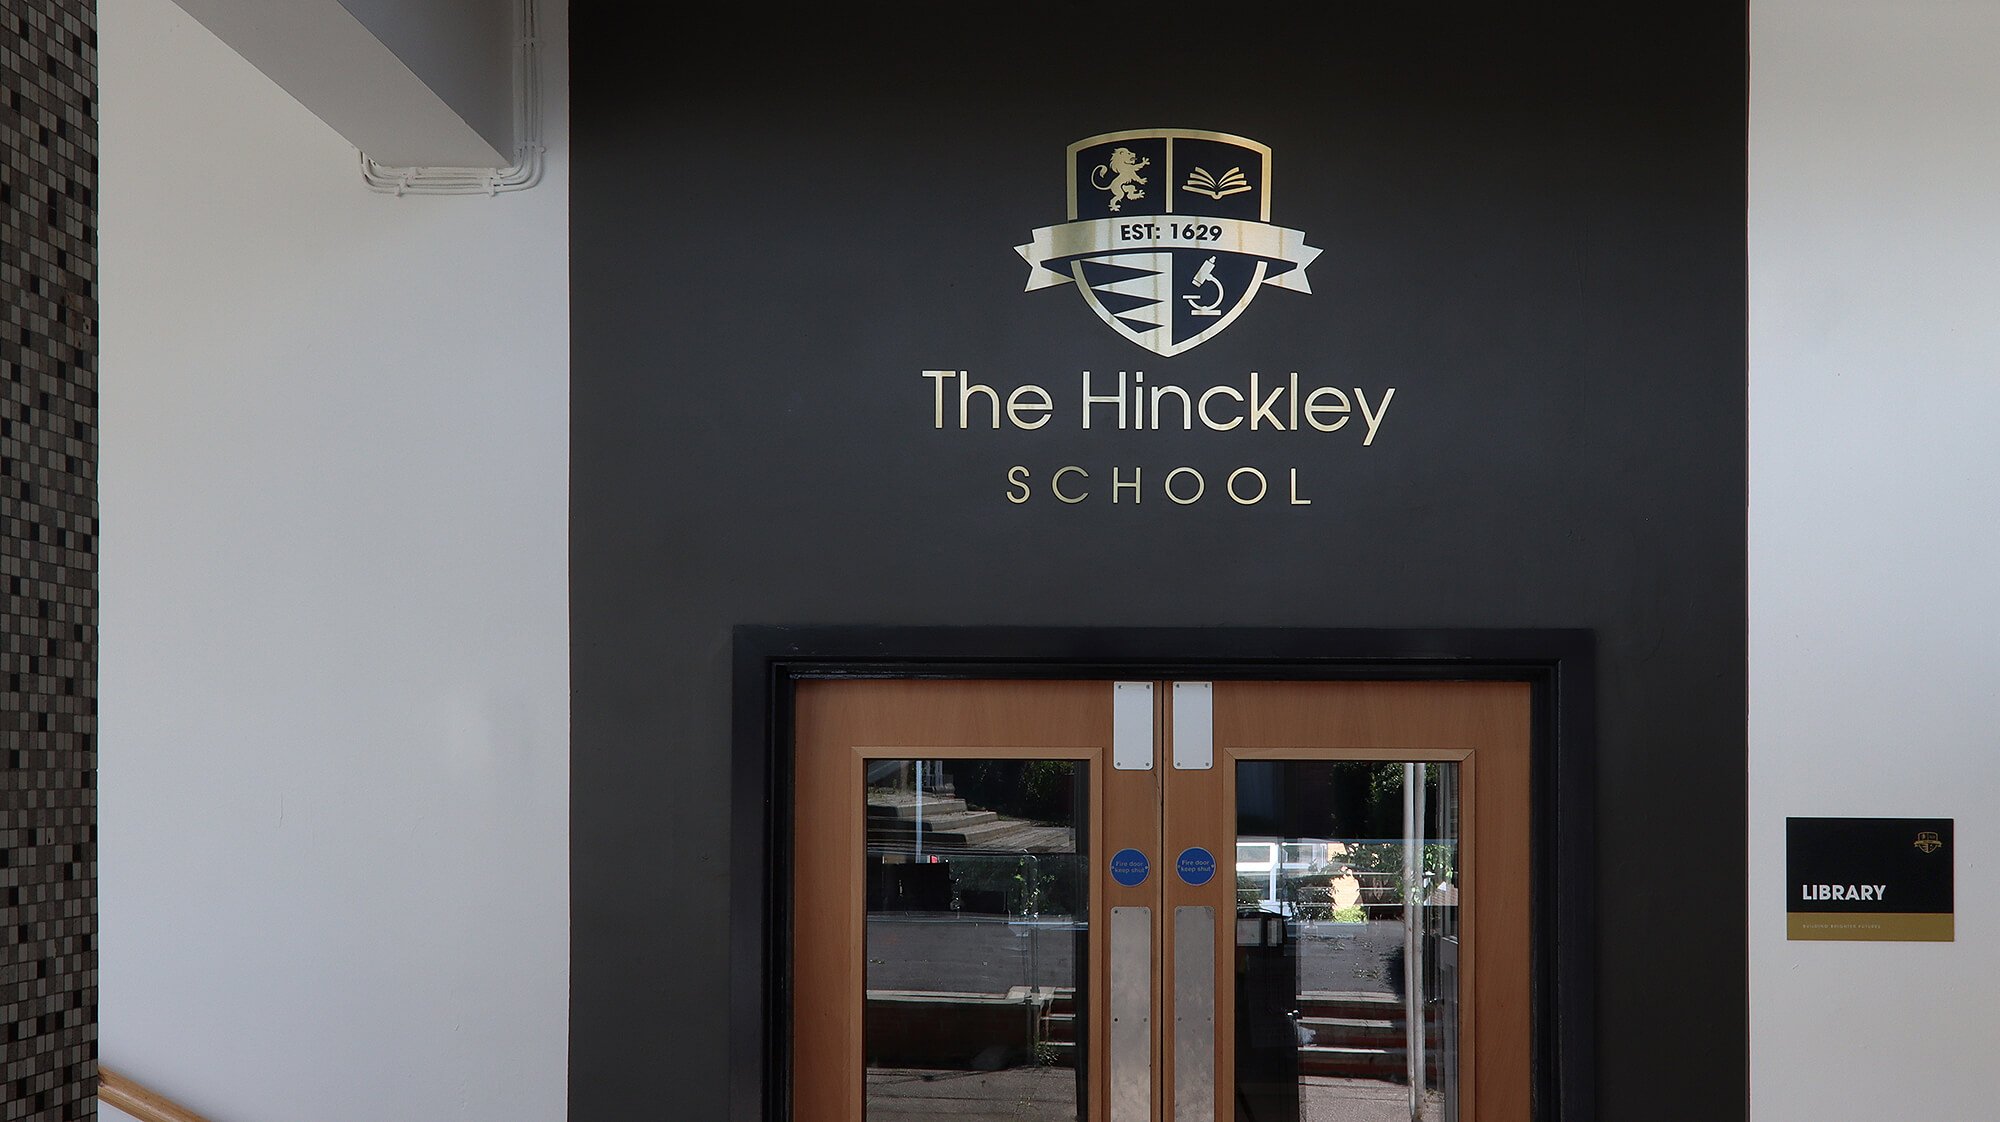 The Hinckley School Brand Sign 01.jpg